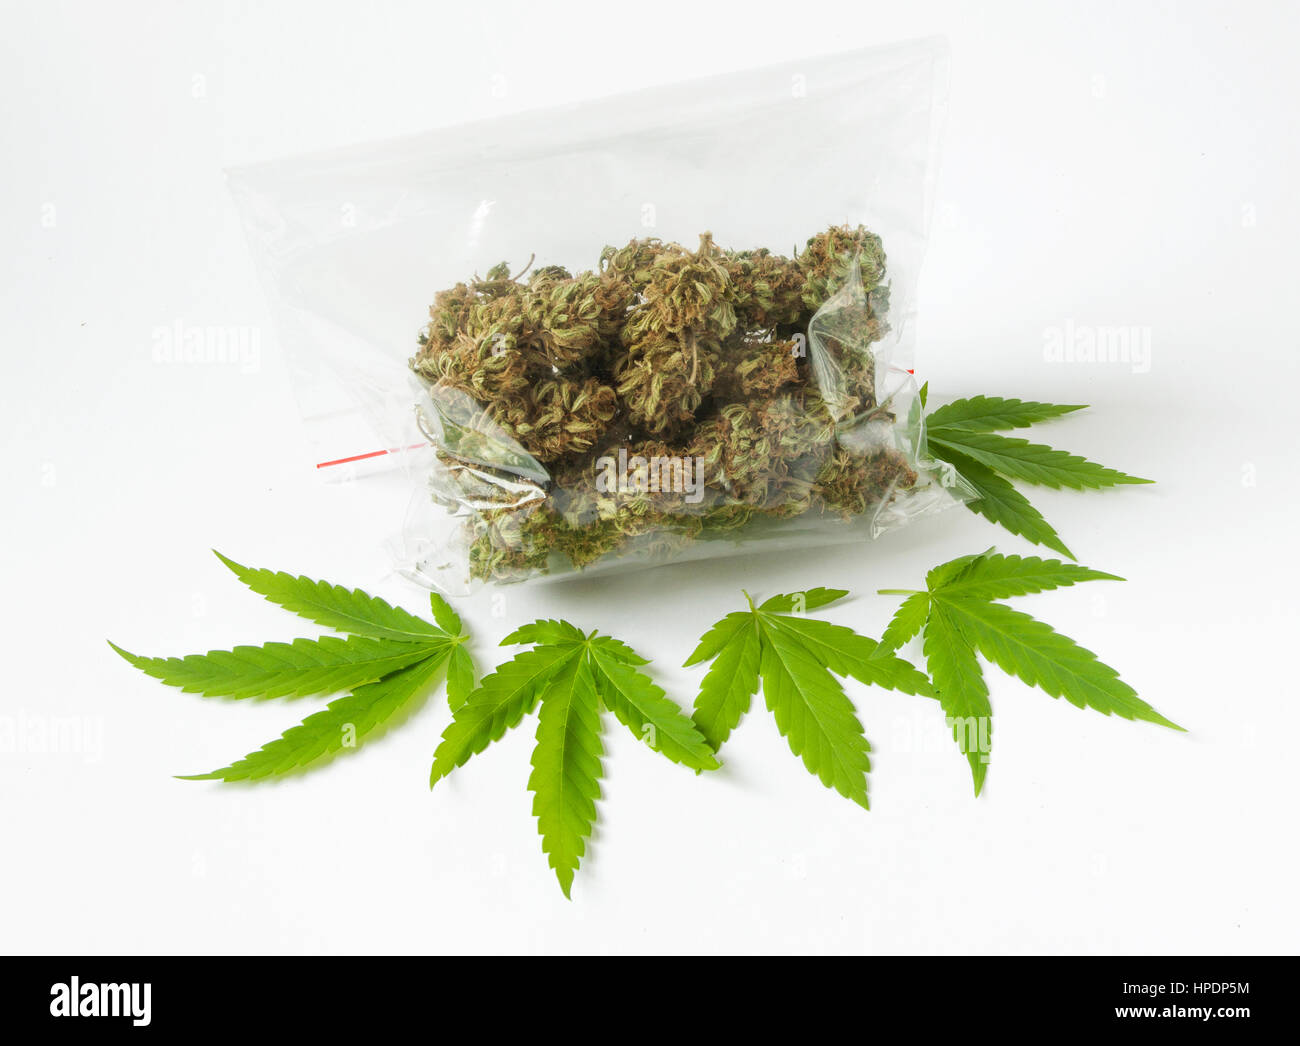 cannabis marijunana medicine dose bag green leaves detail Stock Photo